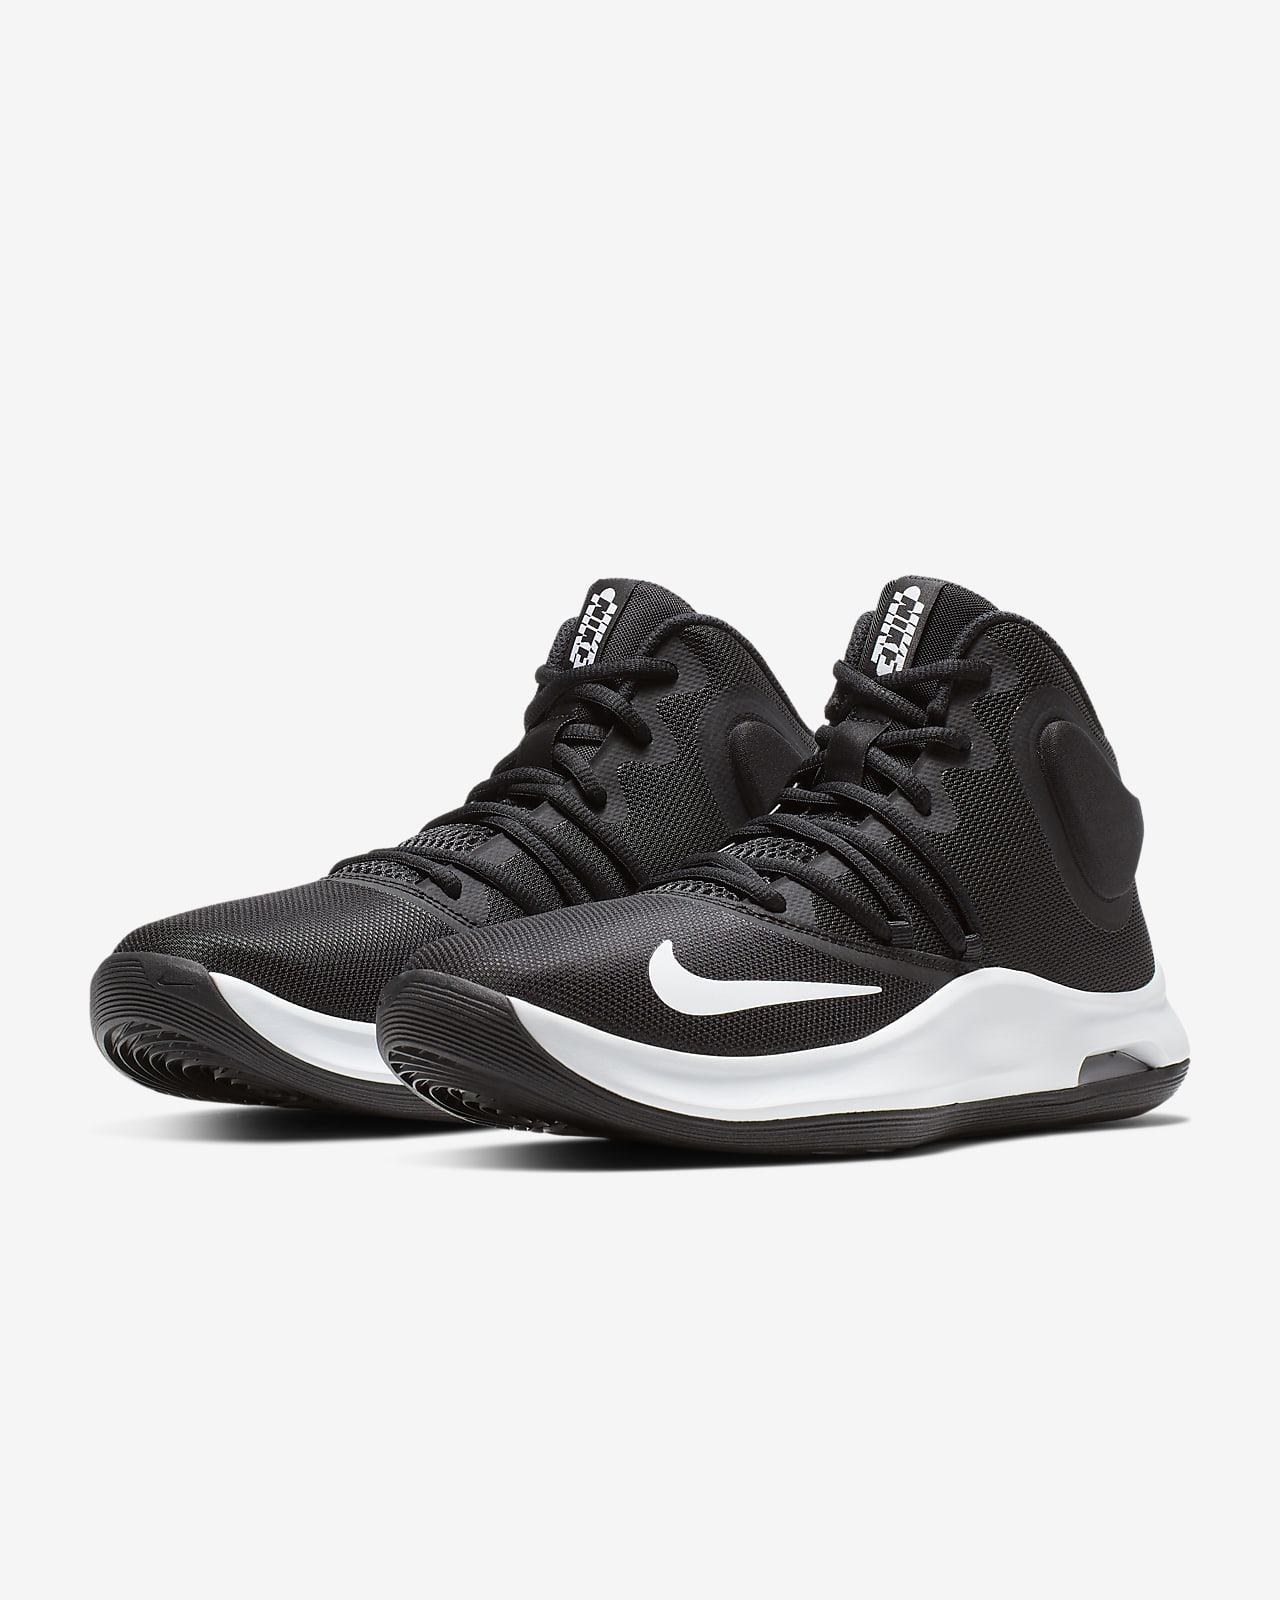 Nike Air Versitile IV Basketball Shoes 